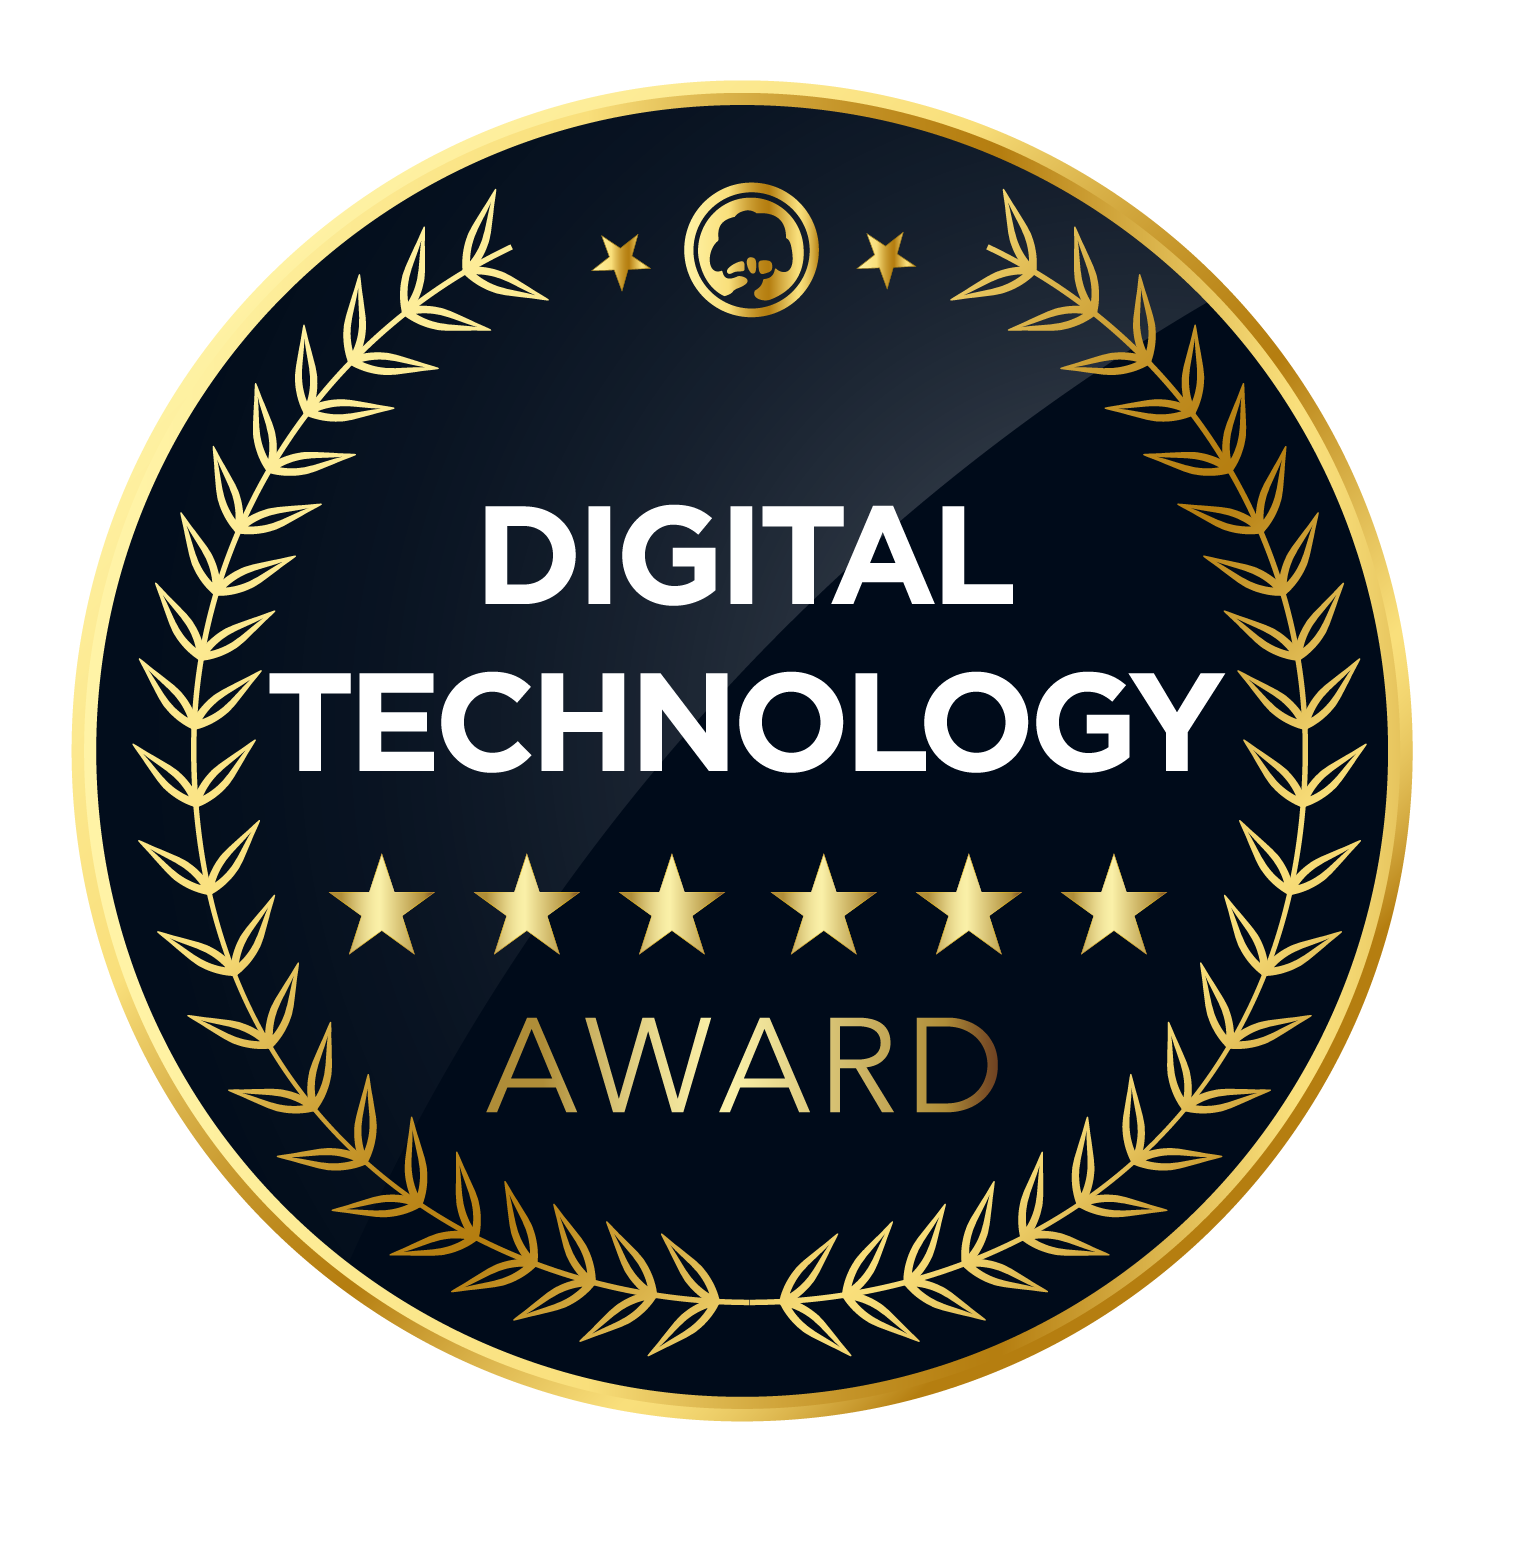 Digital Technology Award